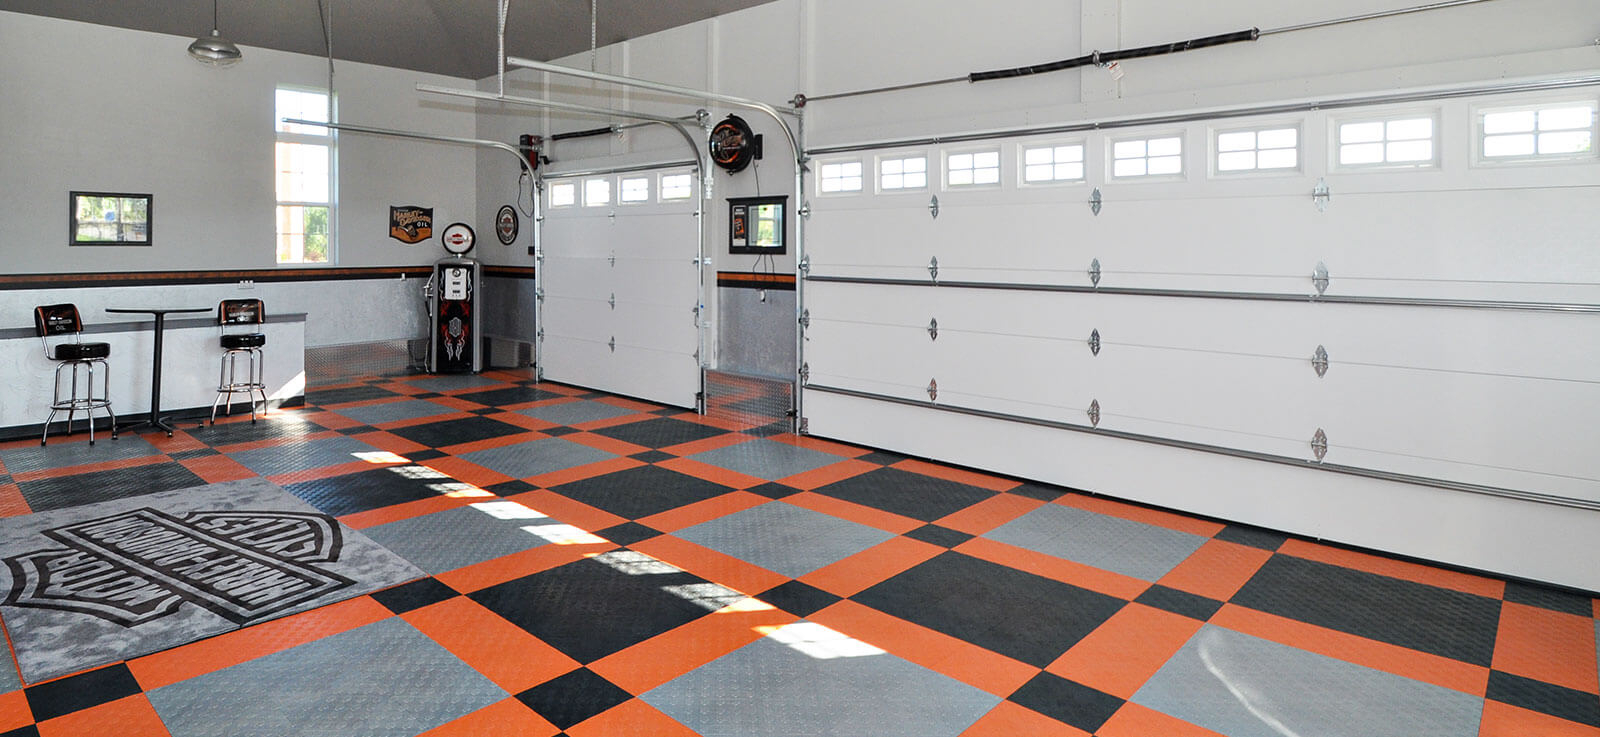 Harley Davidson Garage Flooring intended for dimensions 1600 X 737